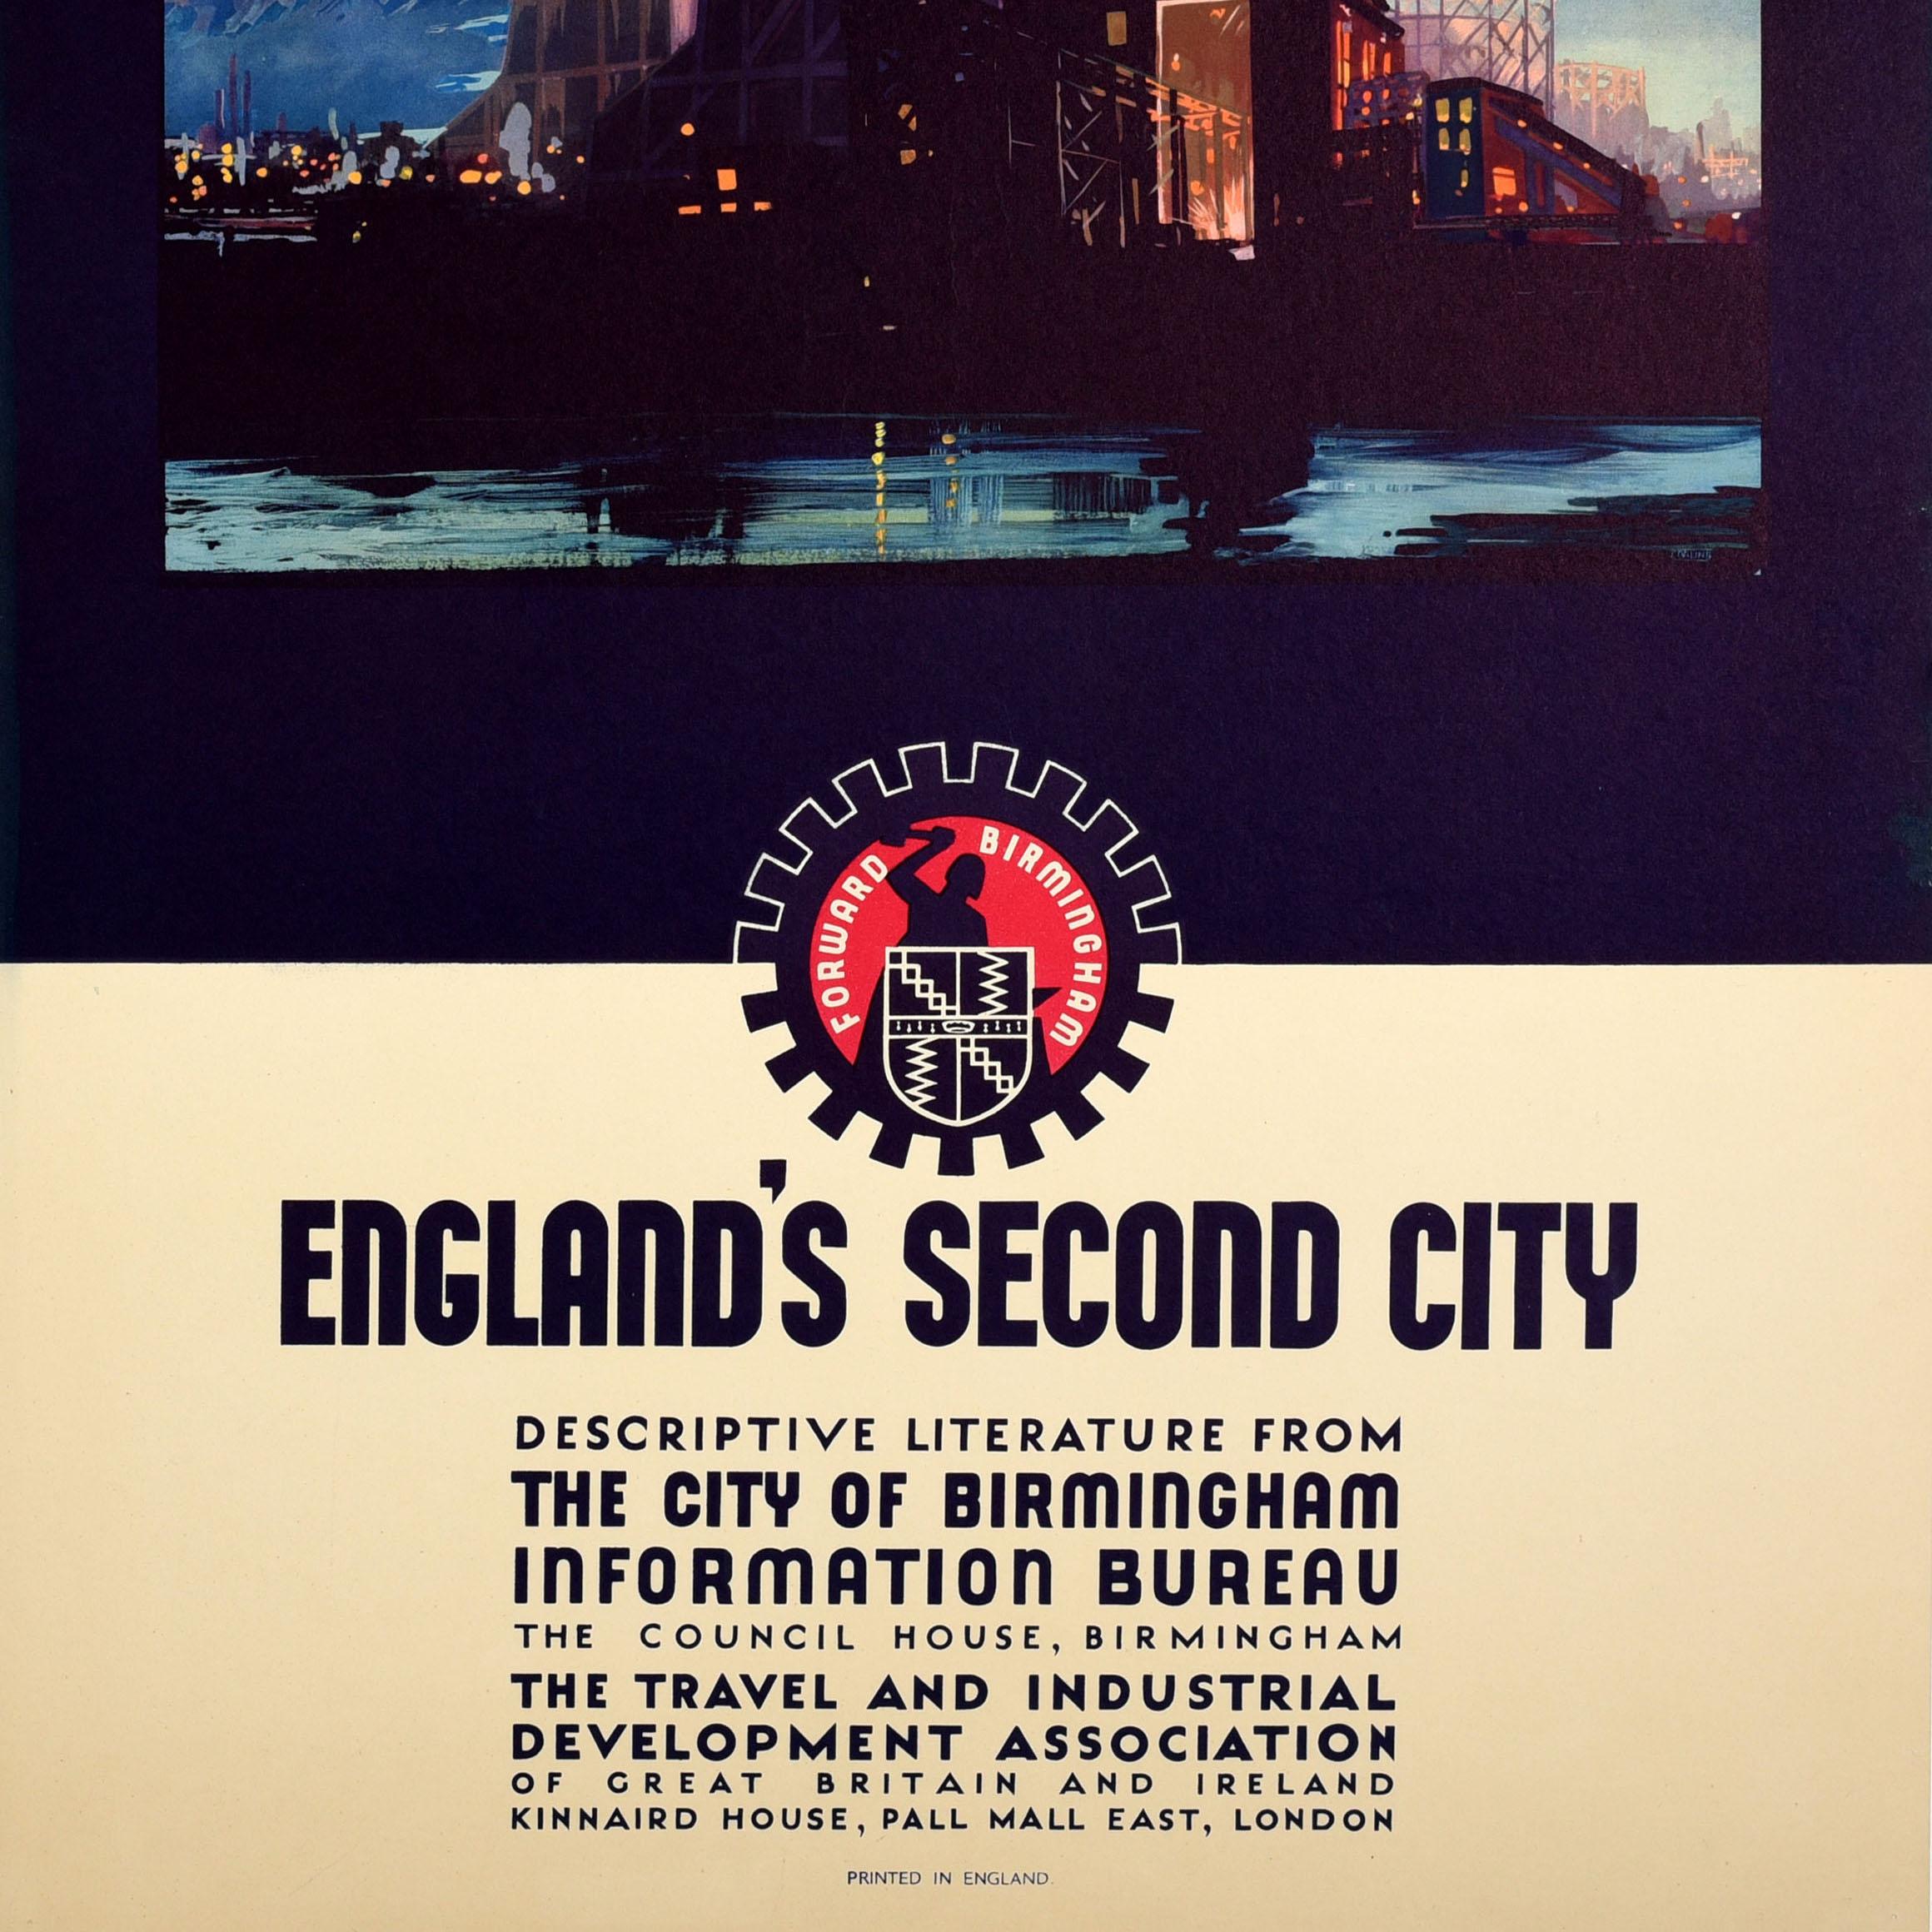 British Original Vintage Travel Poster Birmingham England Second City Art Deco Industry For Sale